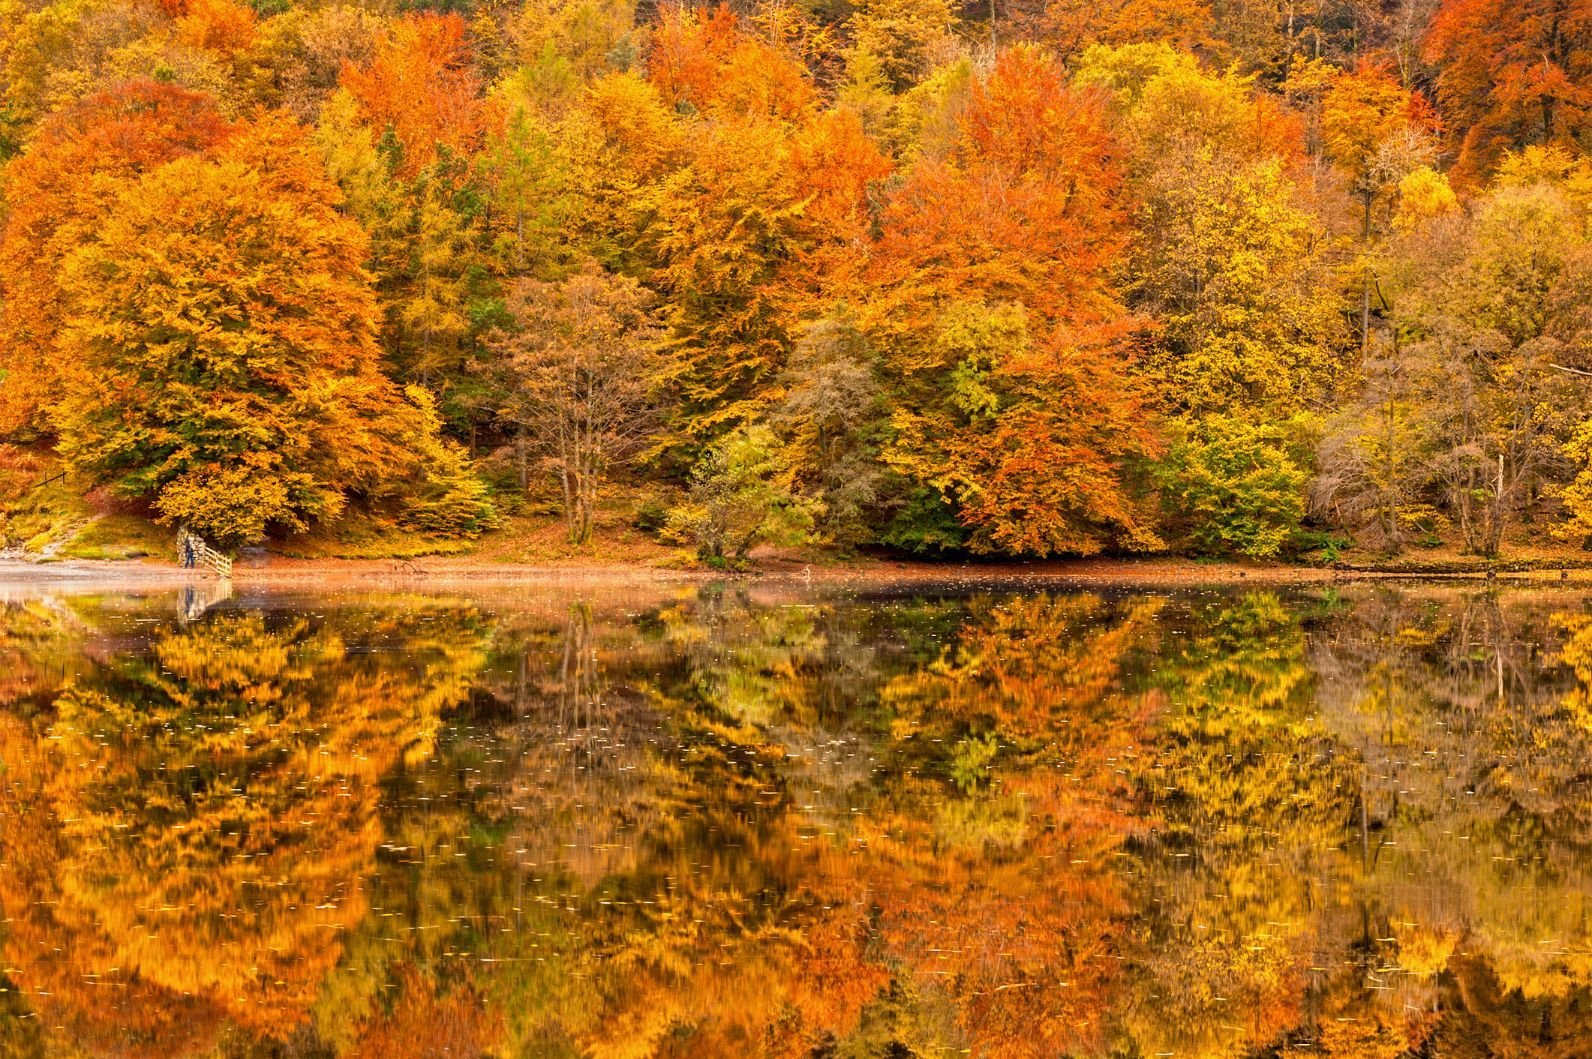 An Autumn scene reflecting back on a lake.